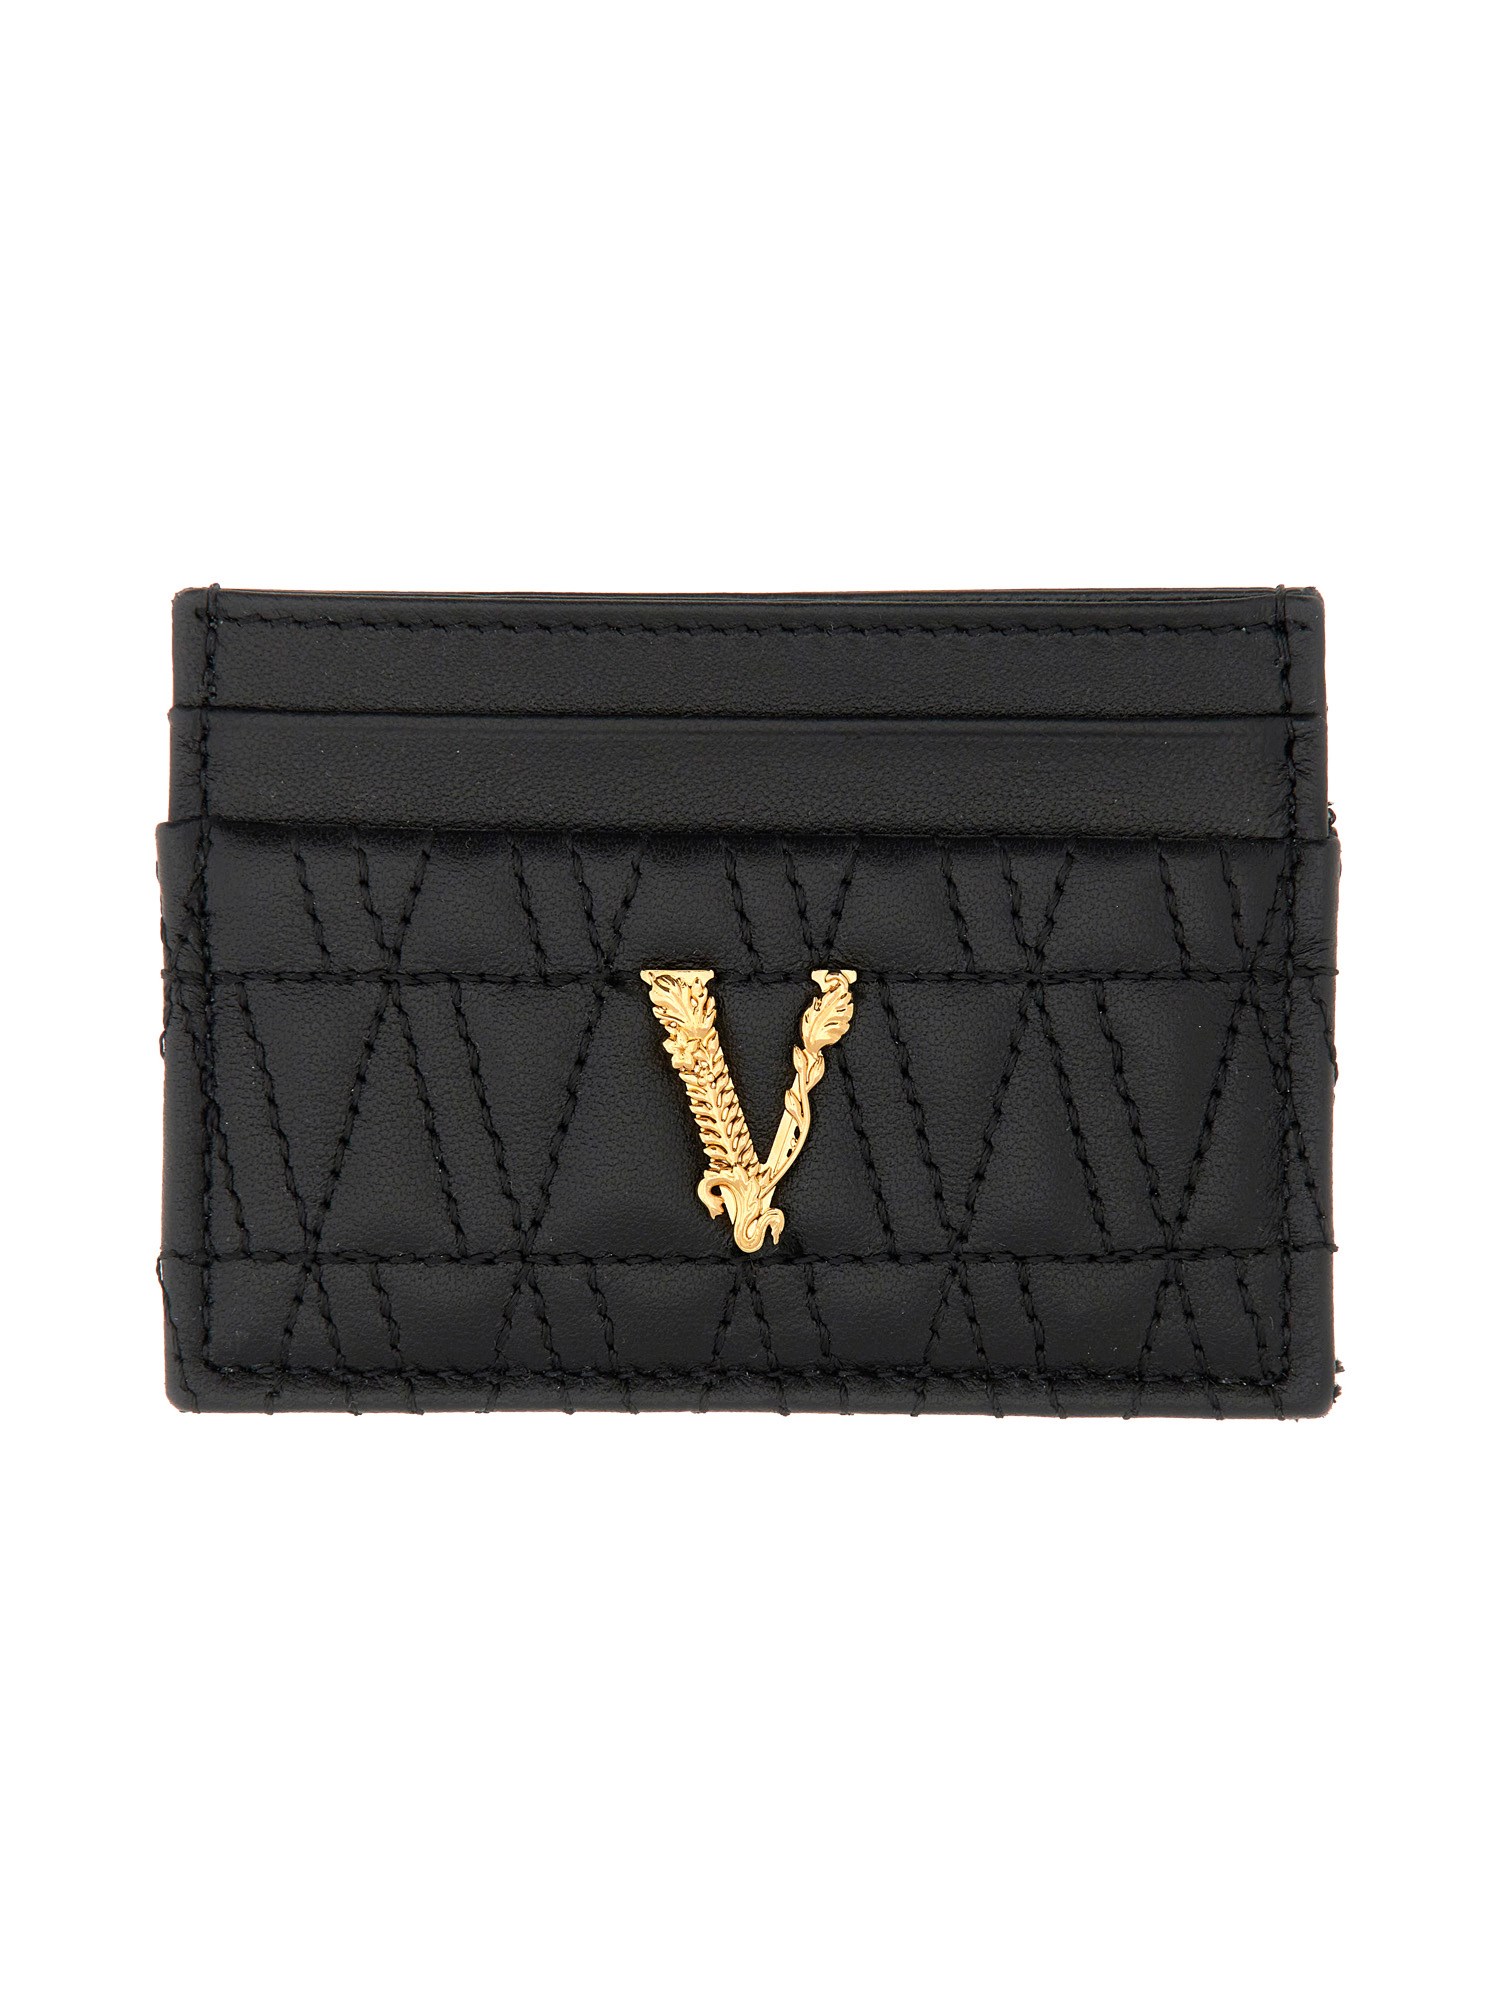 Versace versace card holder "virtus"